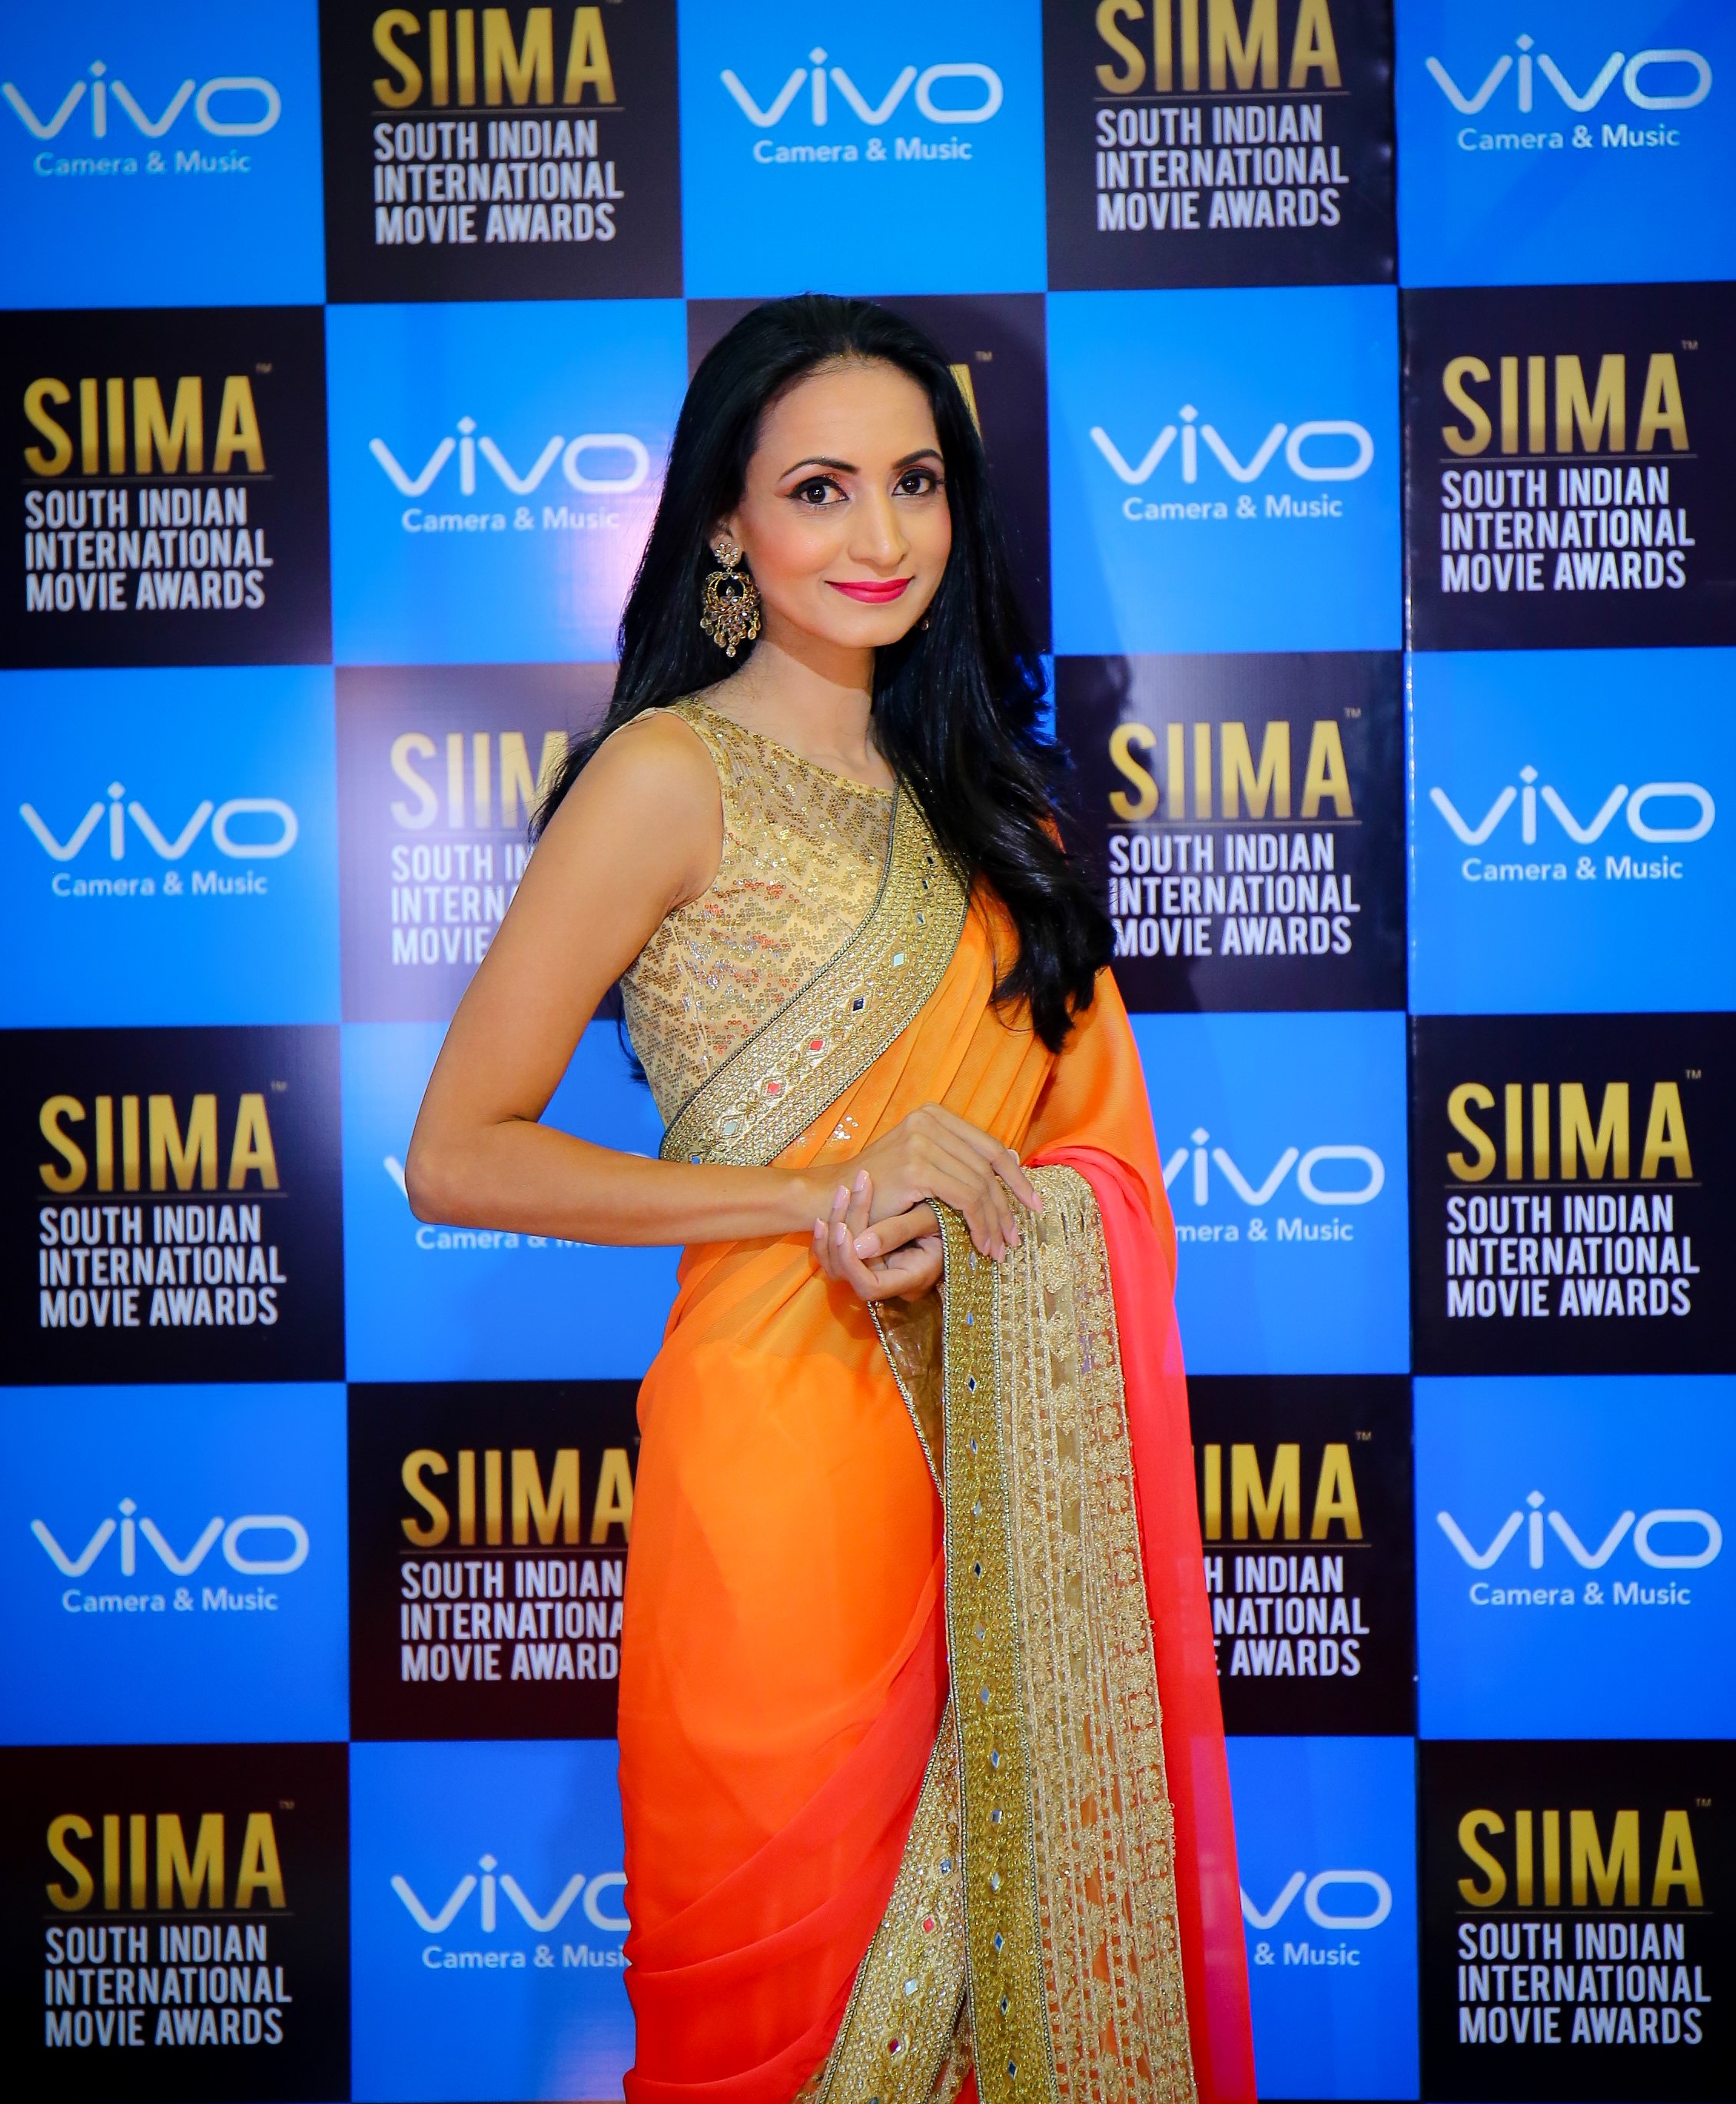 The South Indian International Movie Awards (SIIMA) 2017 With Vivo